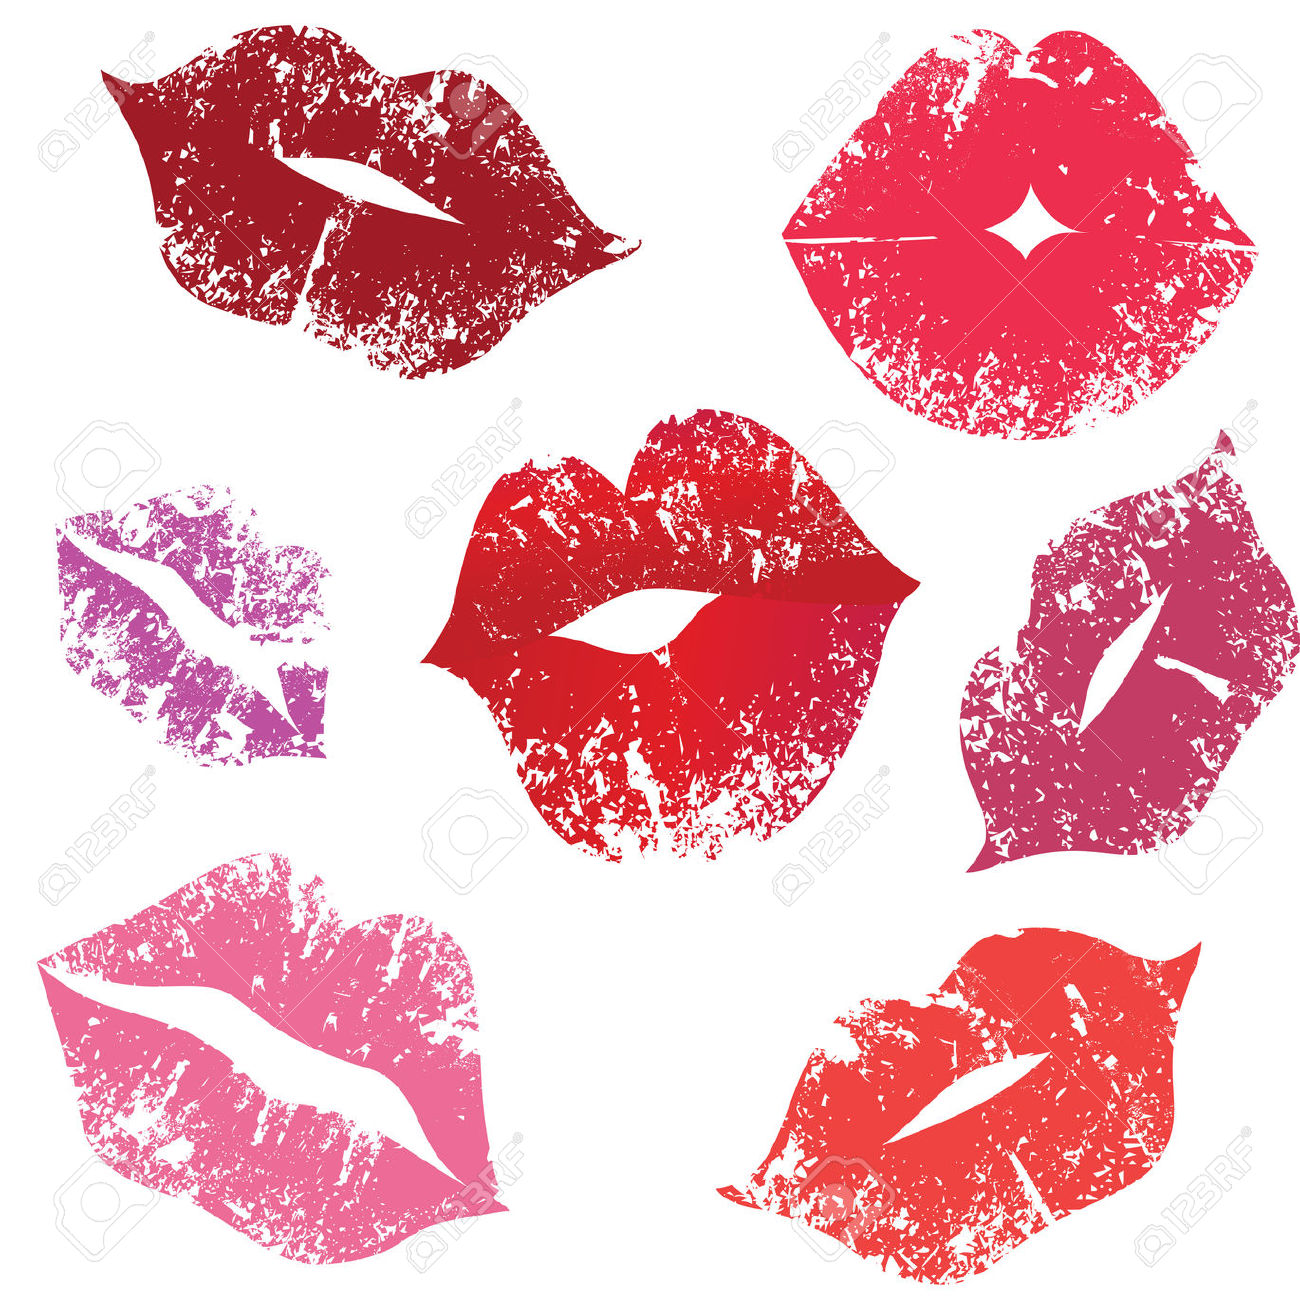 kissing lips clipart free - photo #36